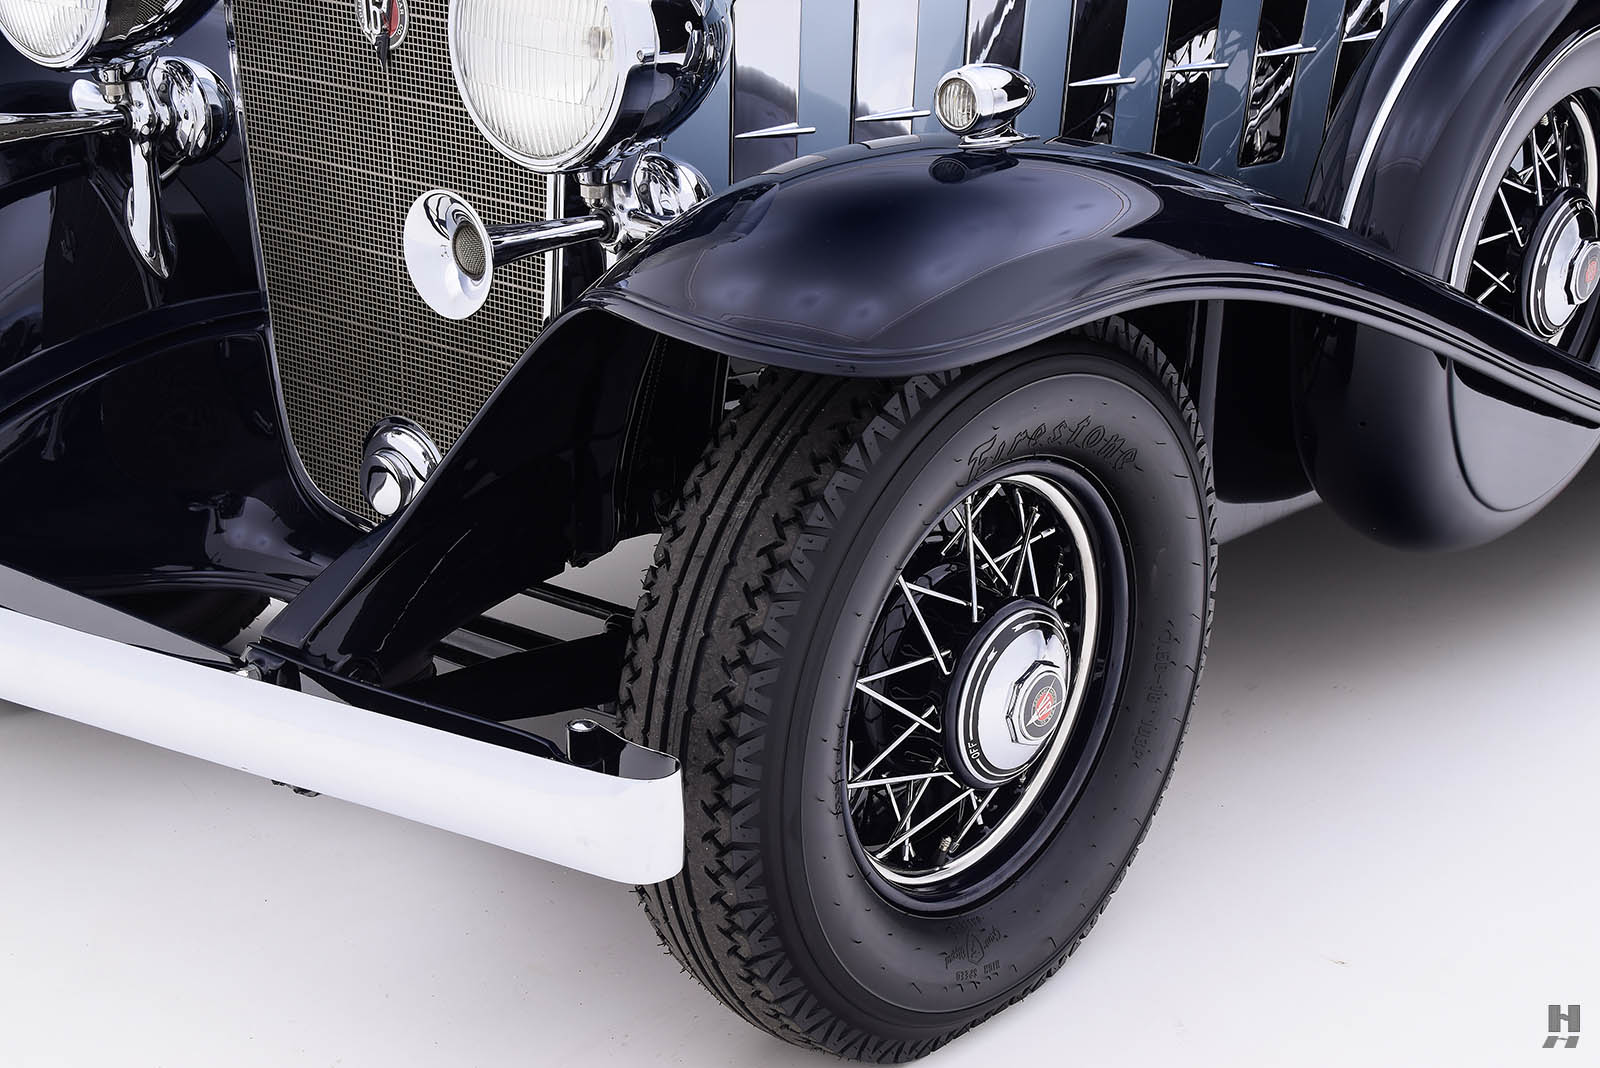 1932 cadillac series 452b fleetwood custom